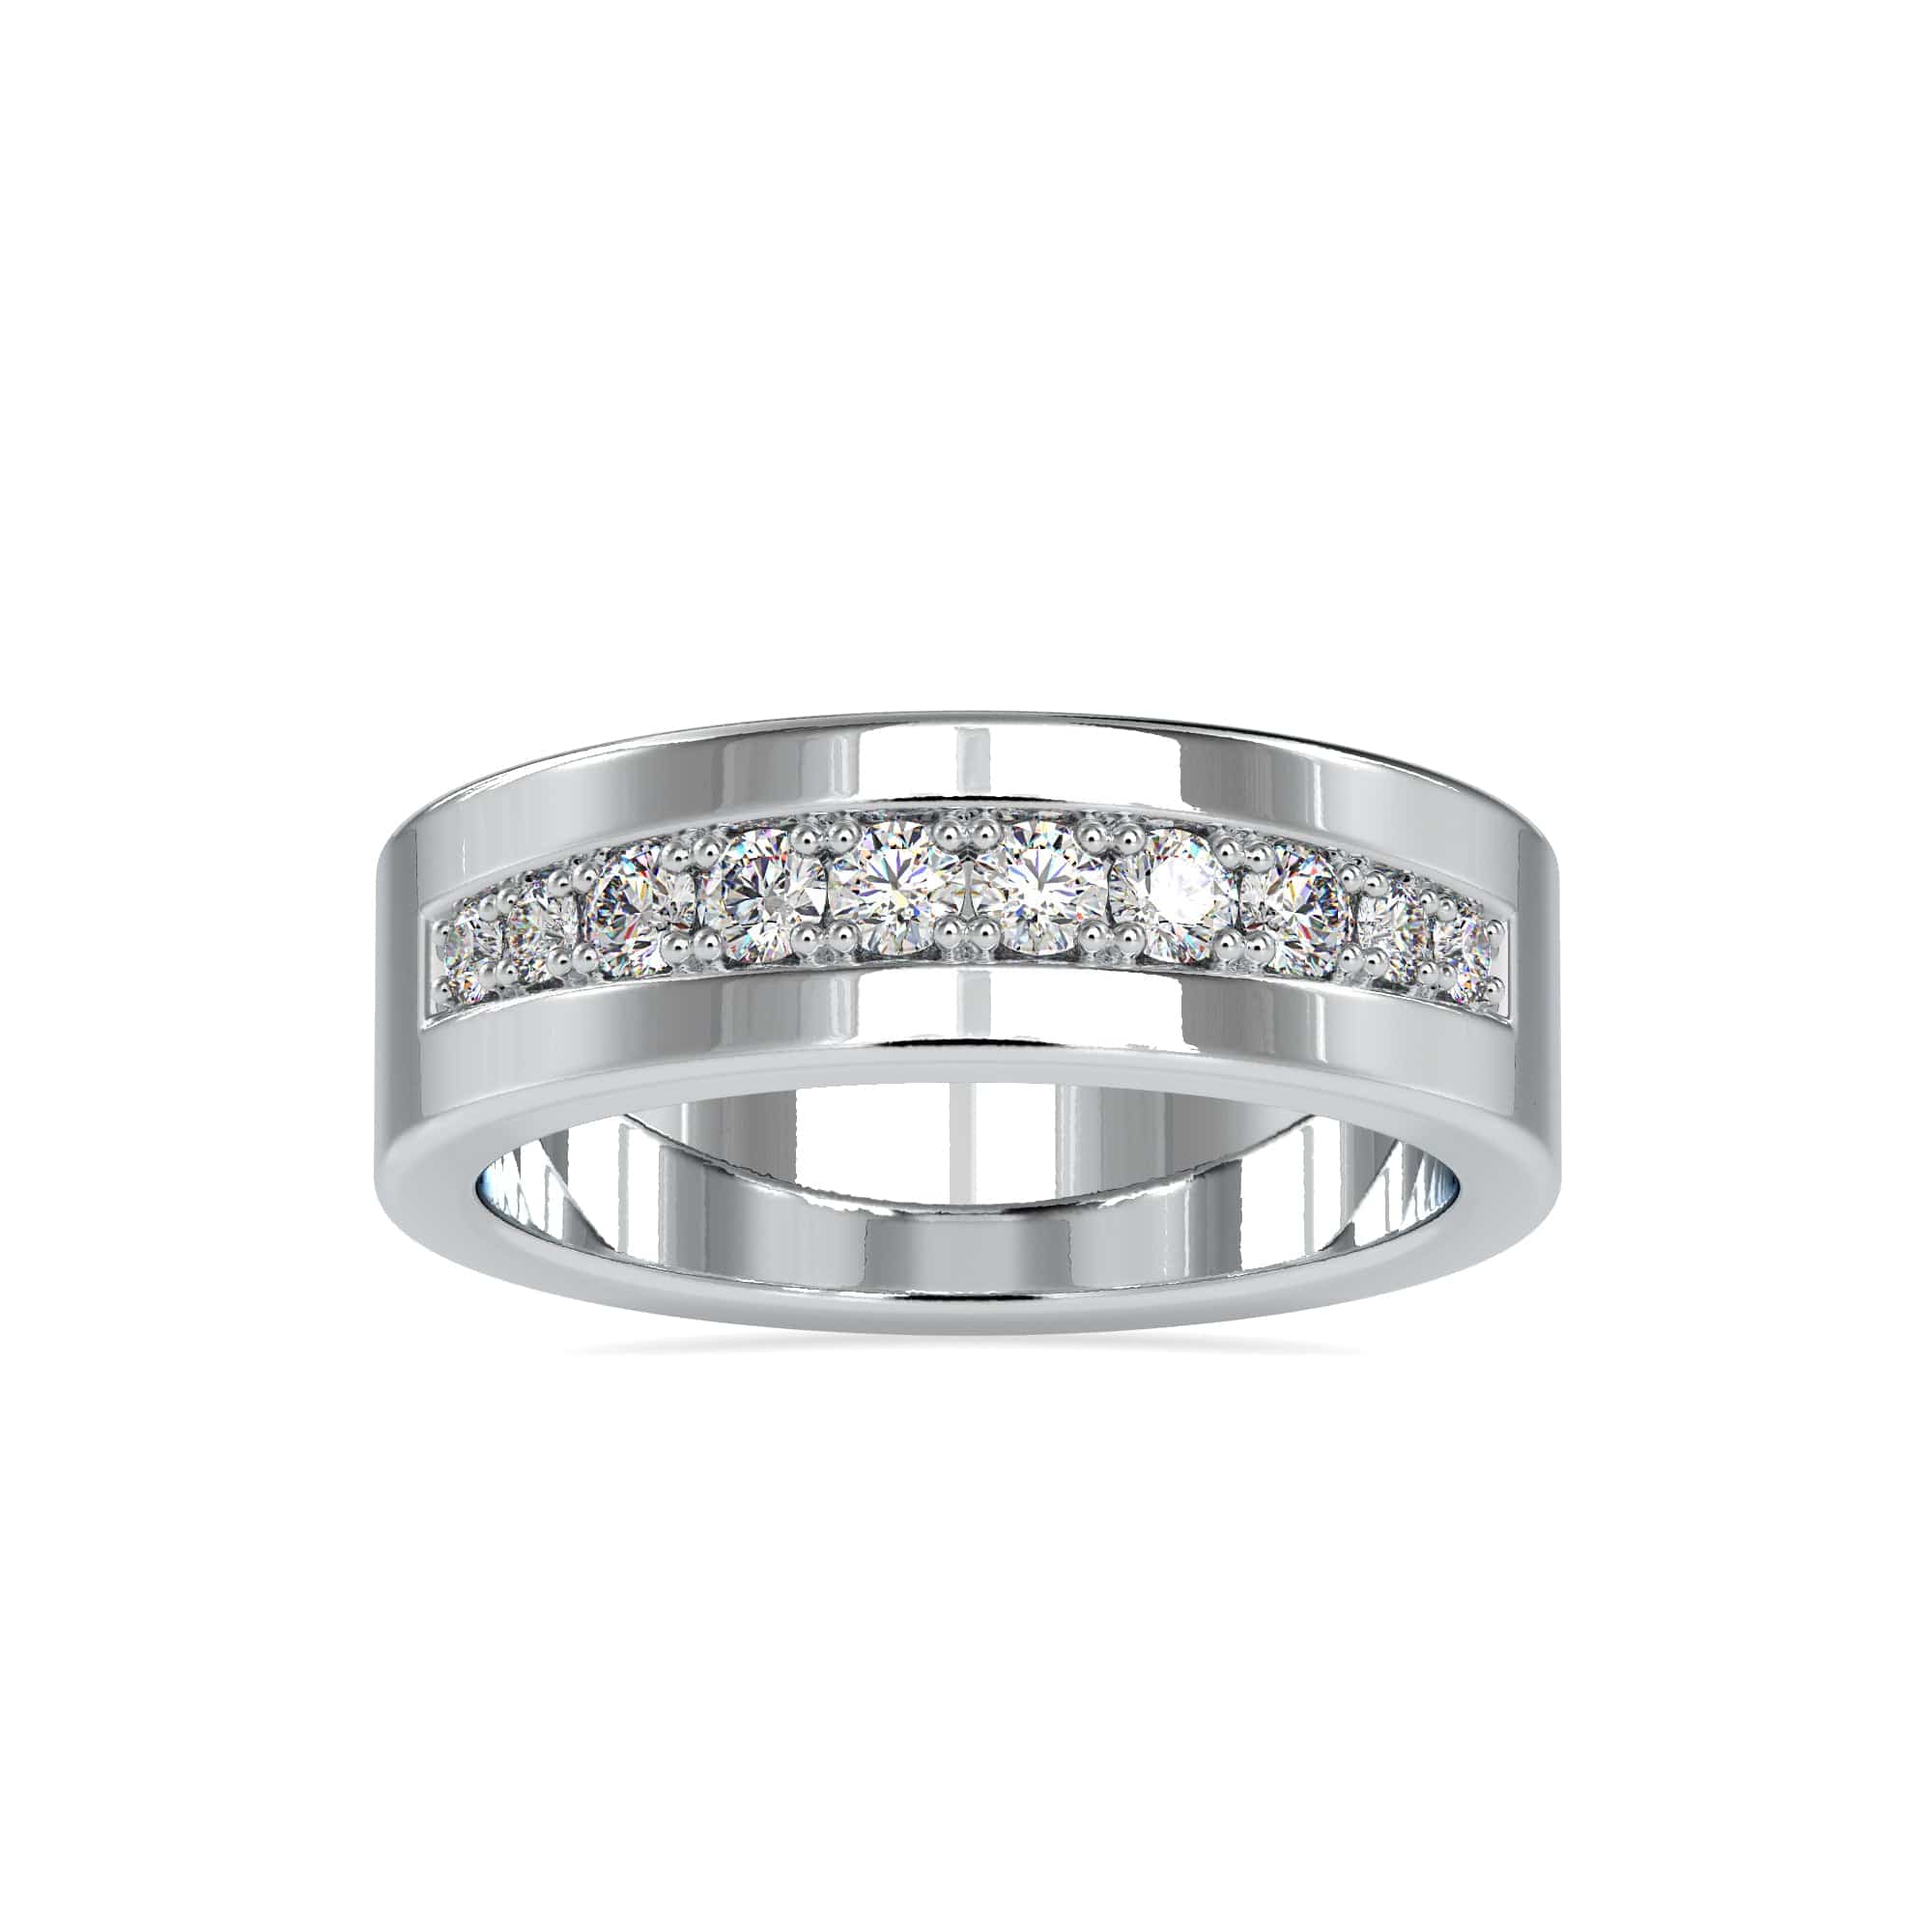 Glimmering 950 Pure Platinum And Diamond Ridged Ring